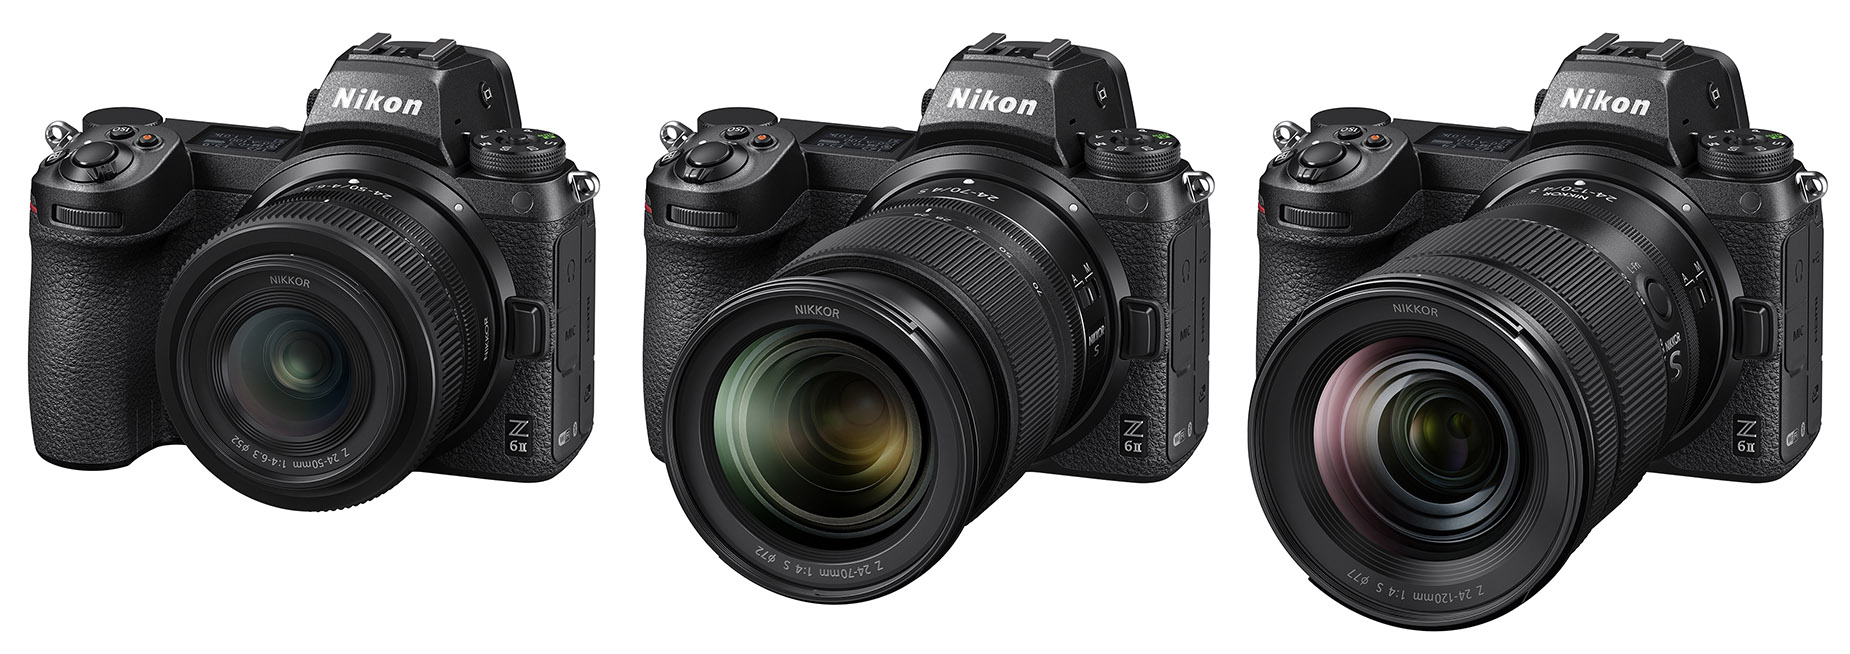 Nikon 24 120mm ed vr. Nikon 24-120 f4. Nikon 24-120mm f/4s. Nikon Nikkor z 24-120mm f/4 s. Nikon z 24-120 f4.